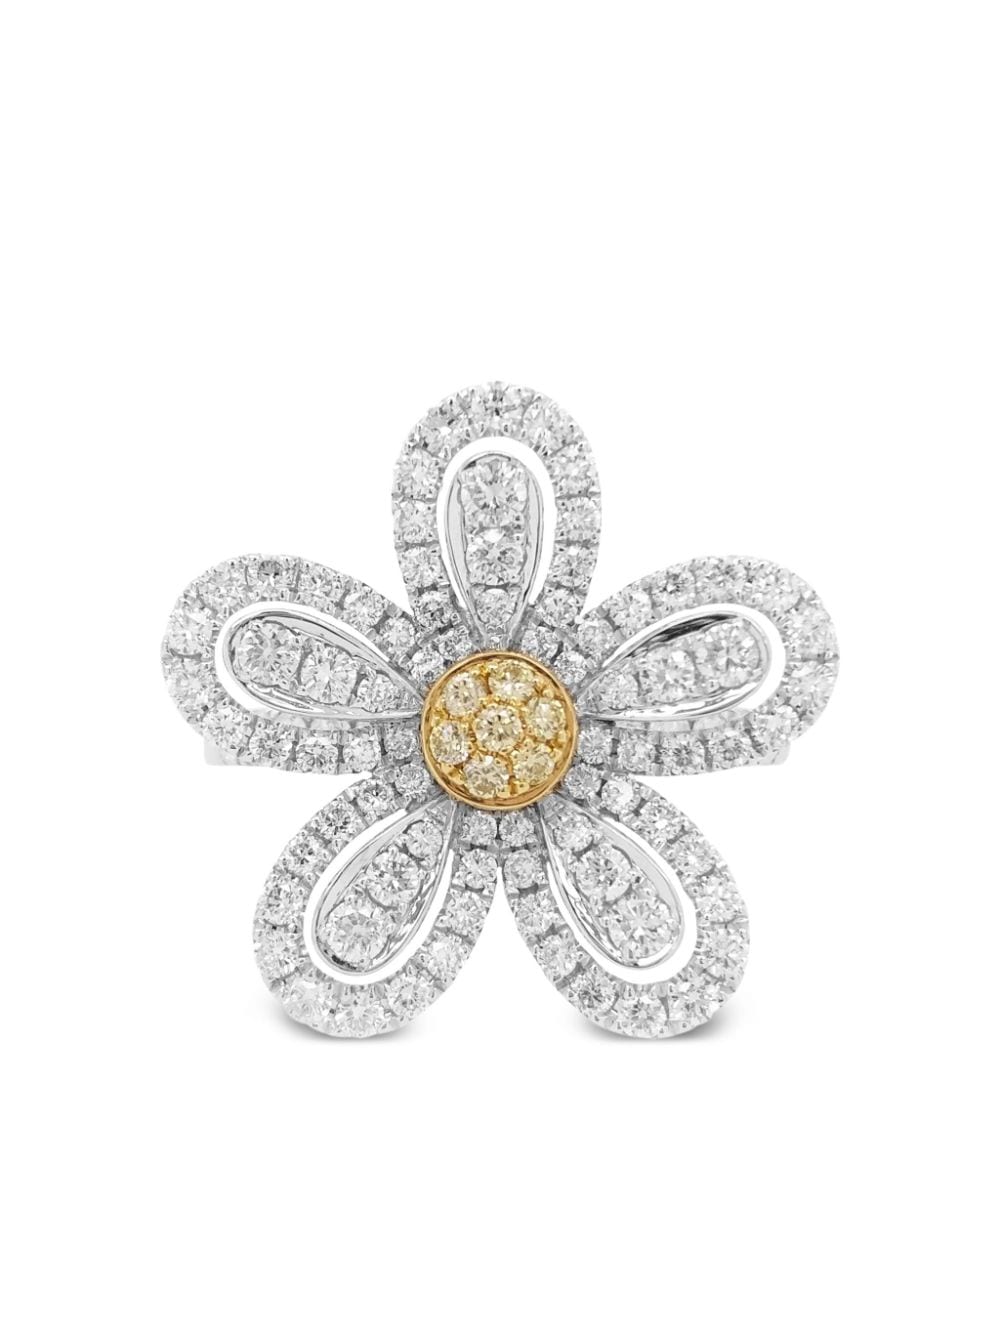 HYT Jewelry 18kt yellow gold and platinum diamond ring - Silver von HYT Jewelry